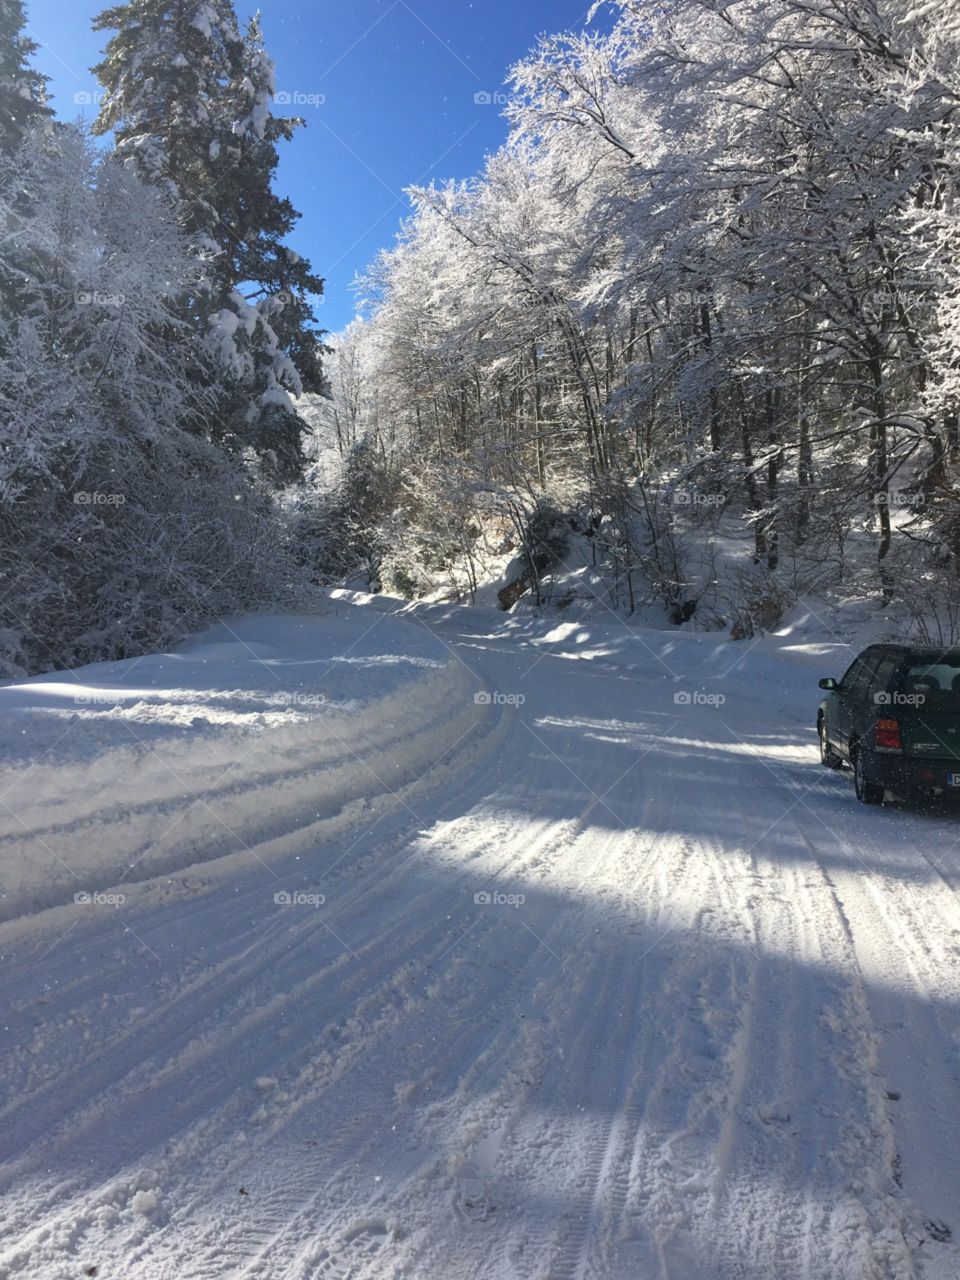 Subaru love winter